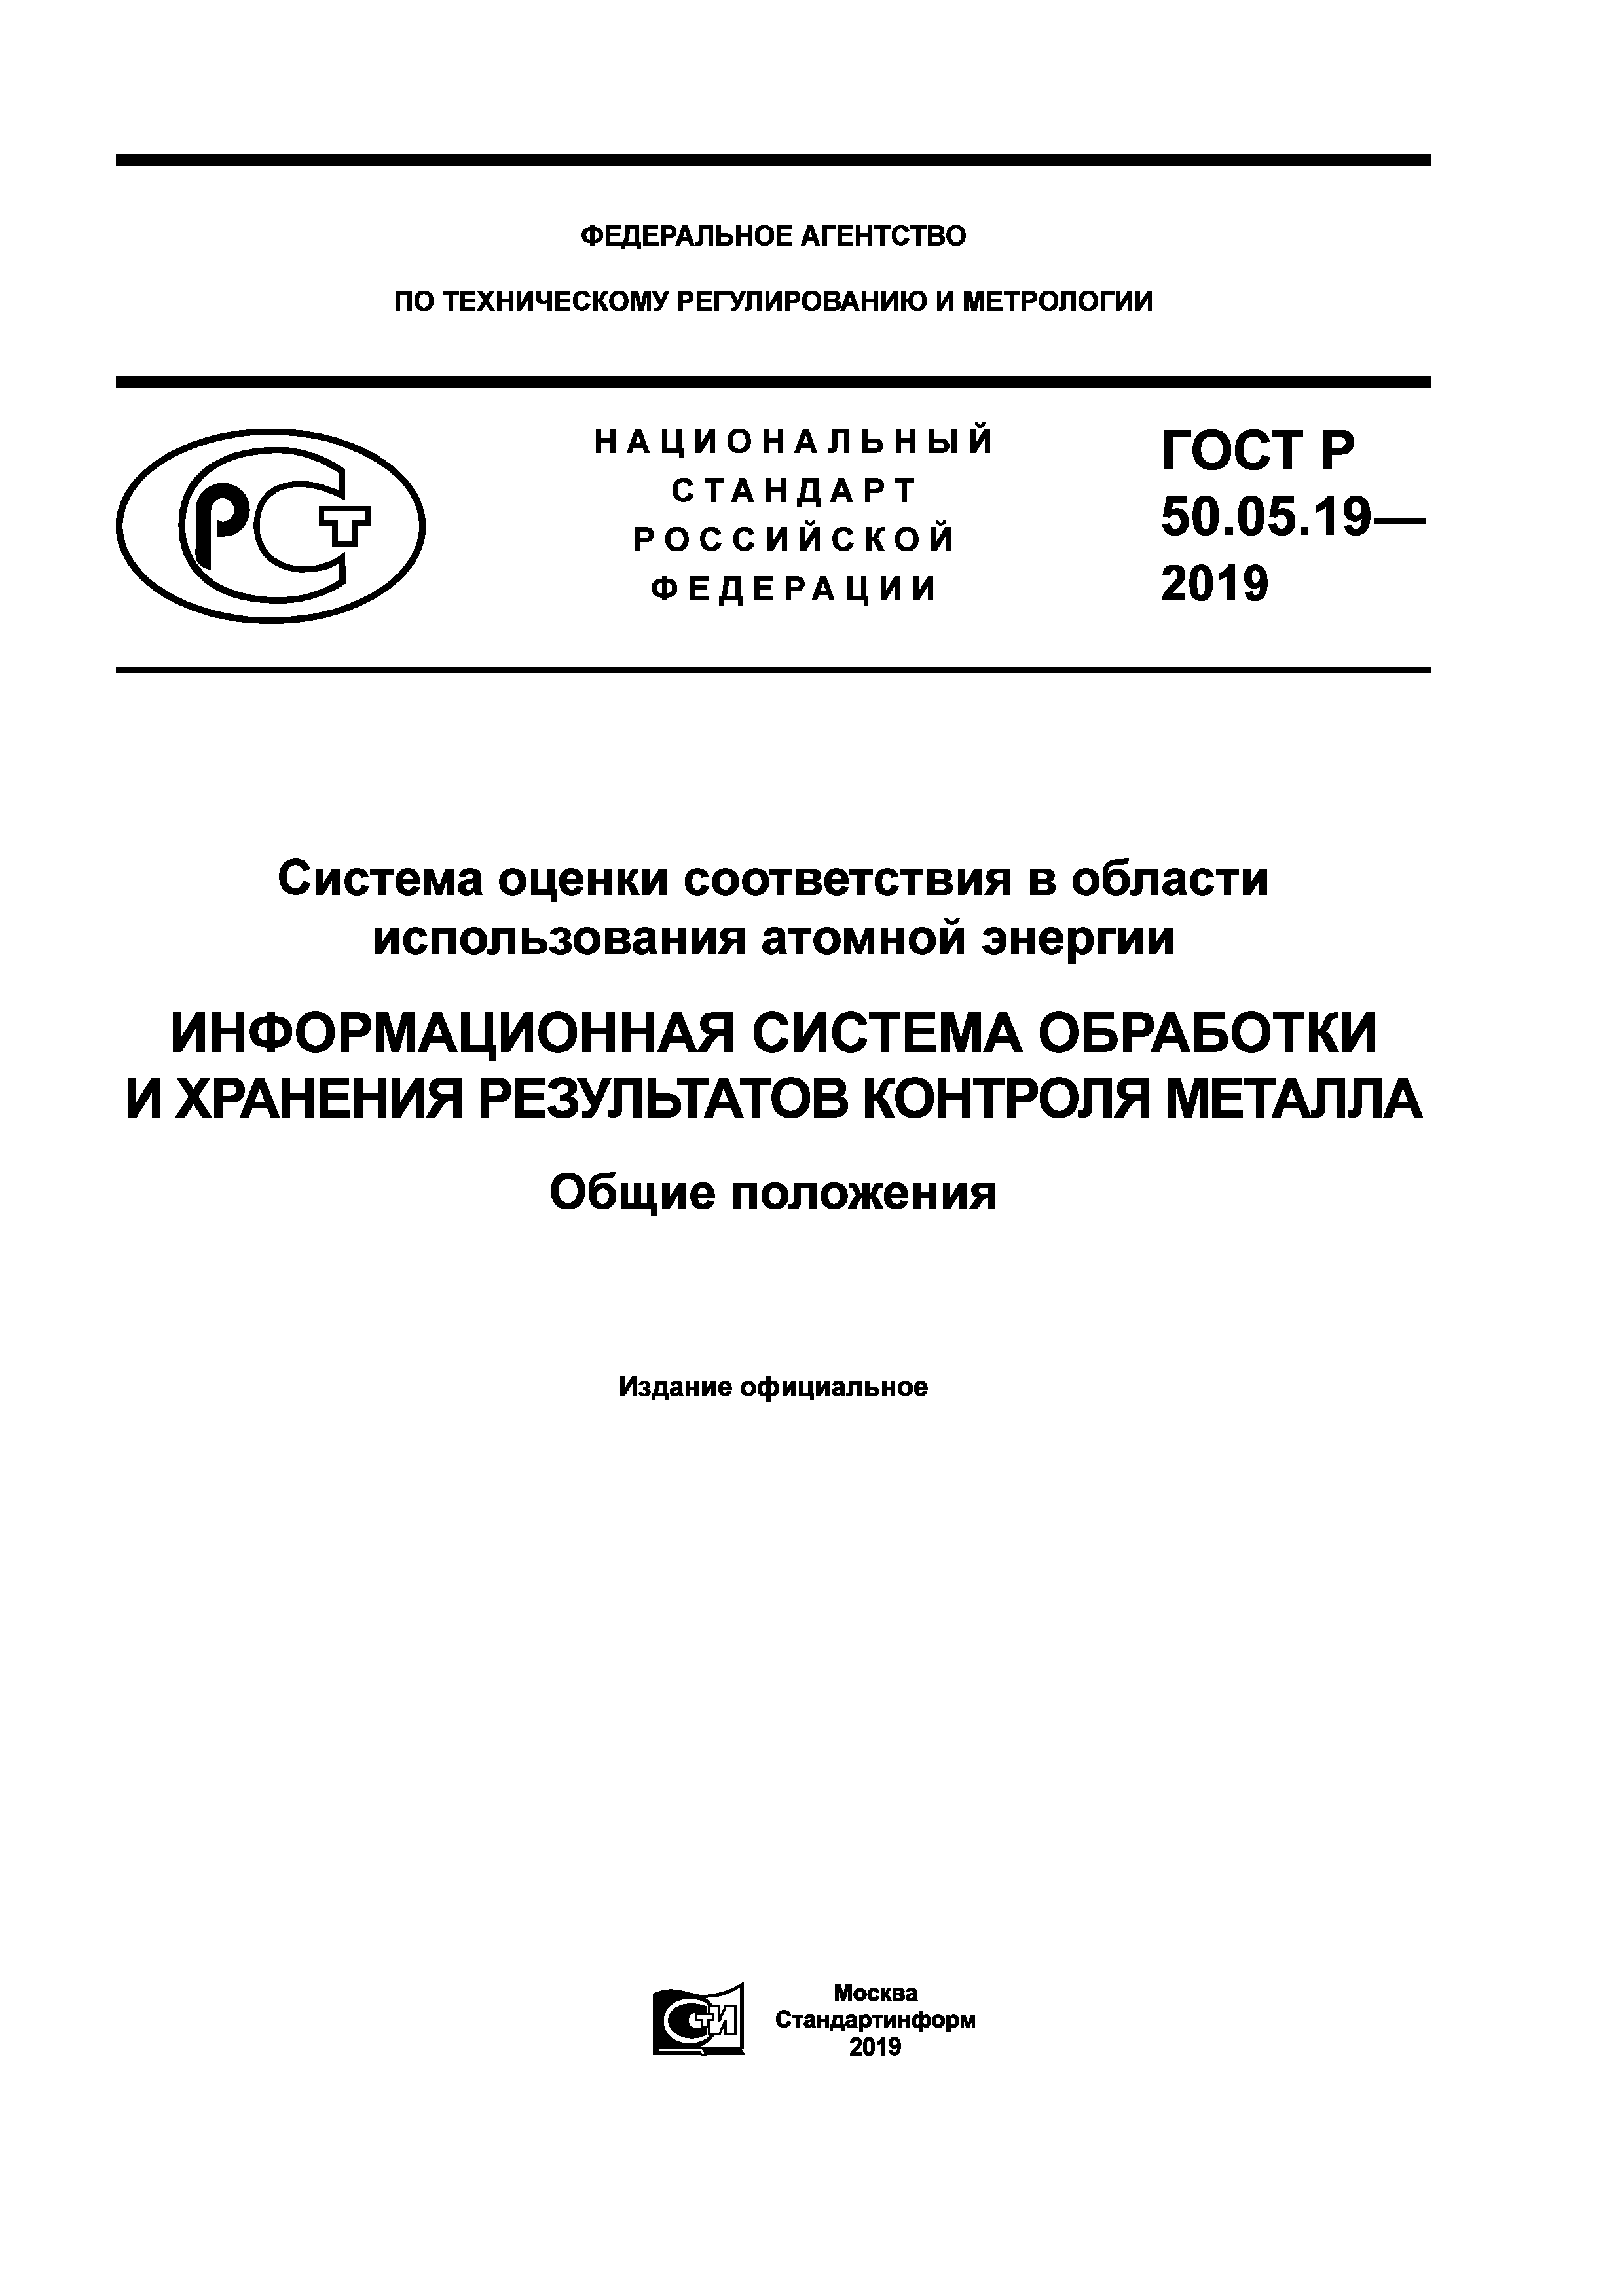 ГОСТ Р 50.05.19-2019